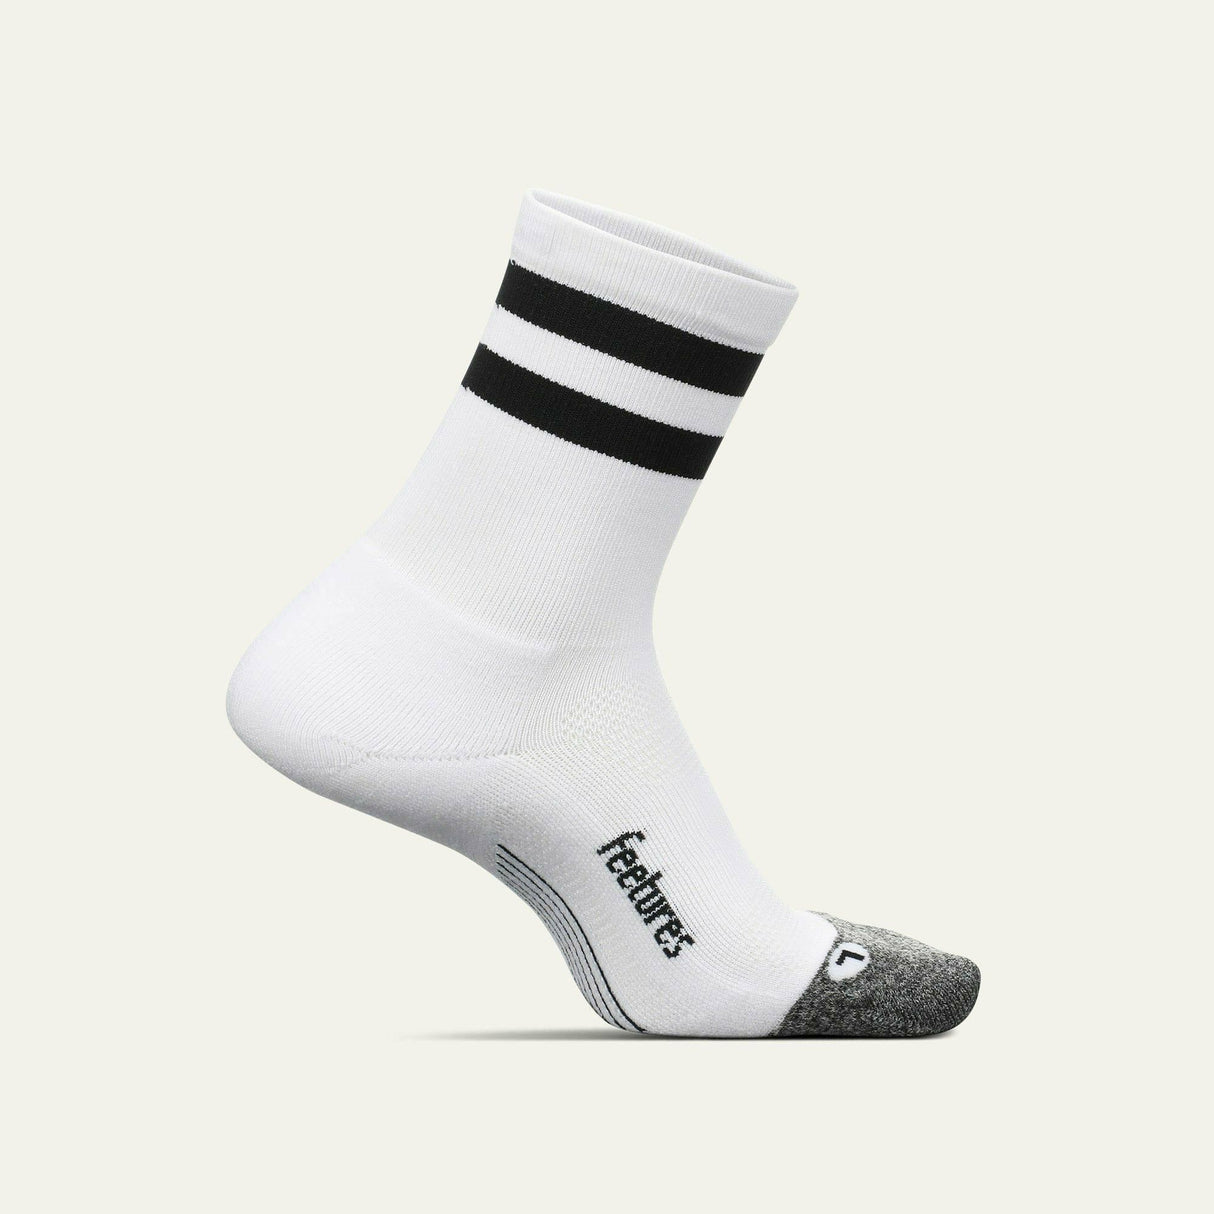 Feetures Elite Light Cushion Mini Crew Socks  -  Medium / White High Top Stripe